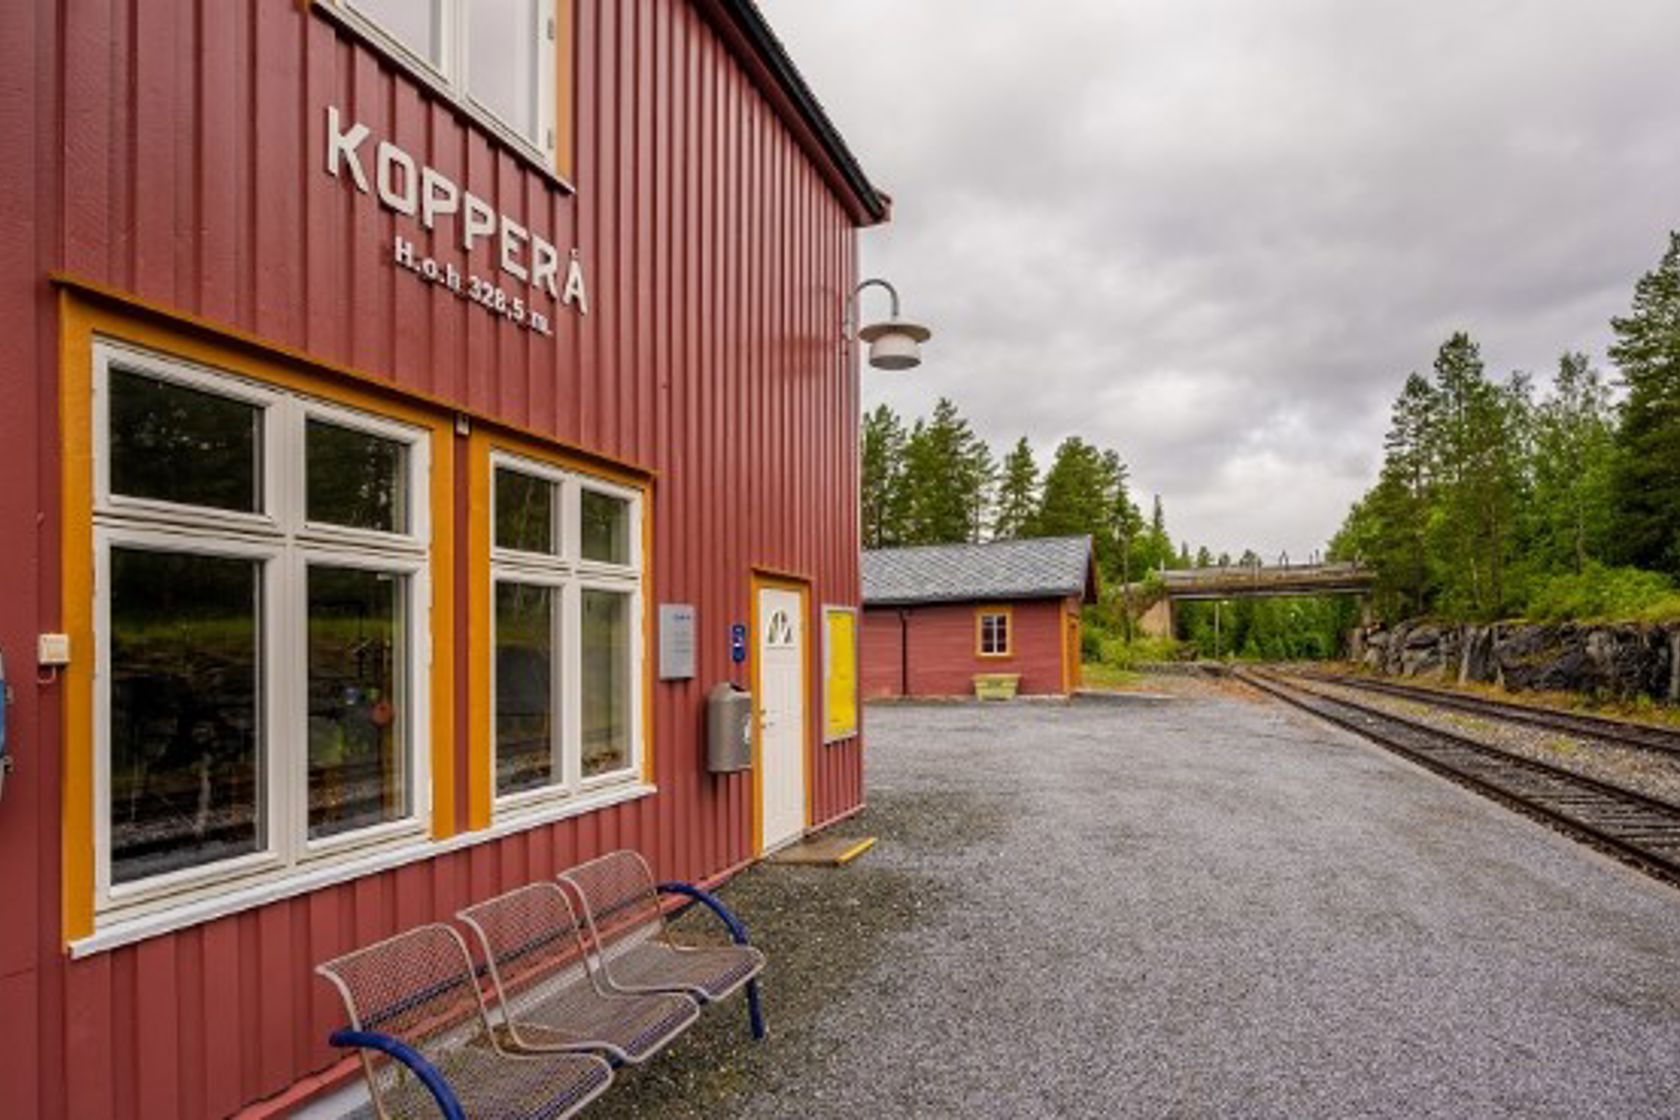 Exterior view of Kopperå station